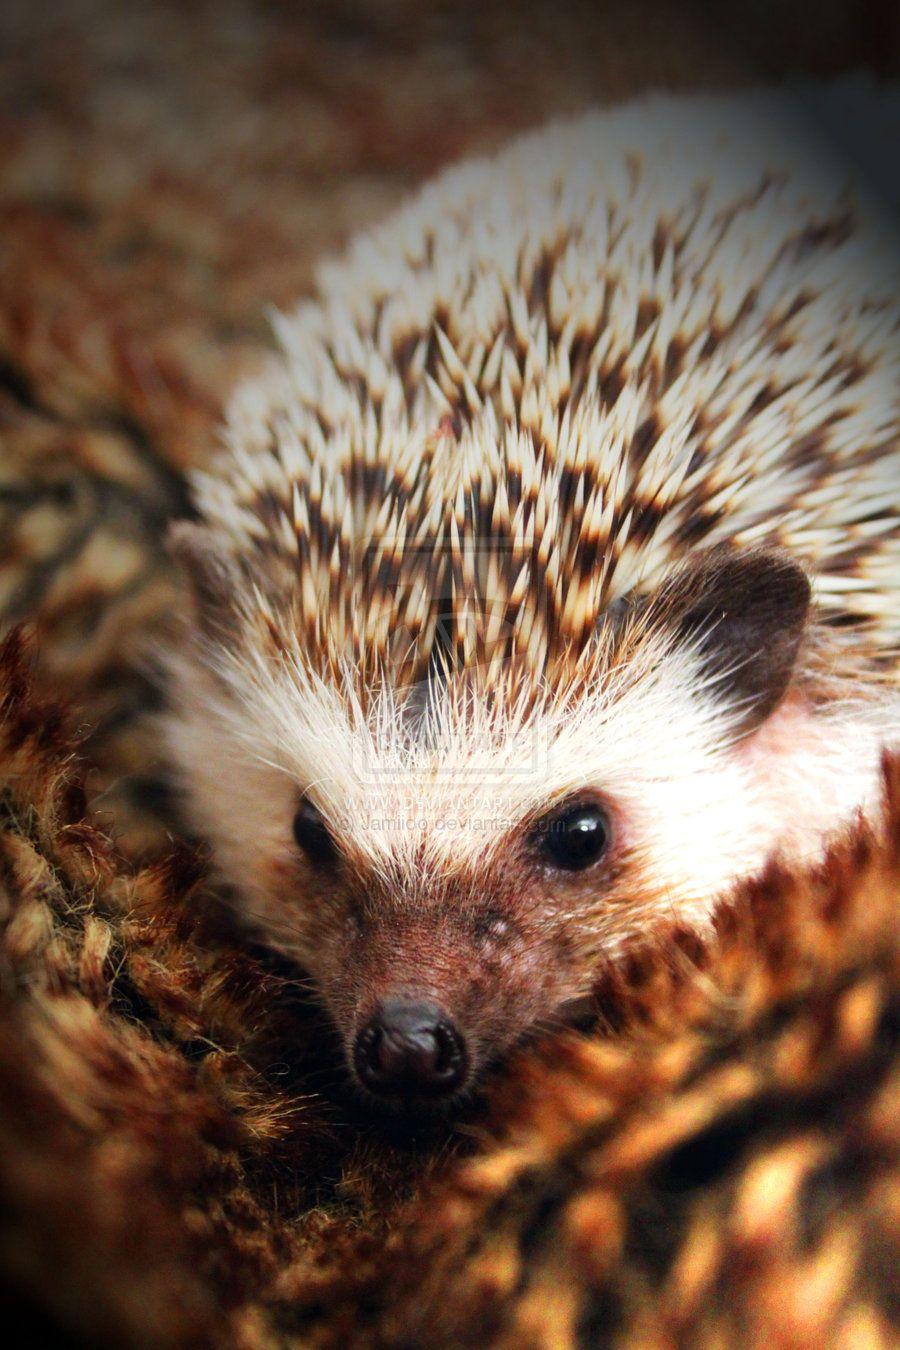 African Pygmy Hedgehog Image. Hedgehogs & other